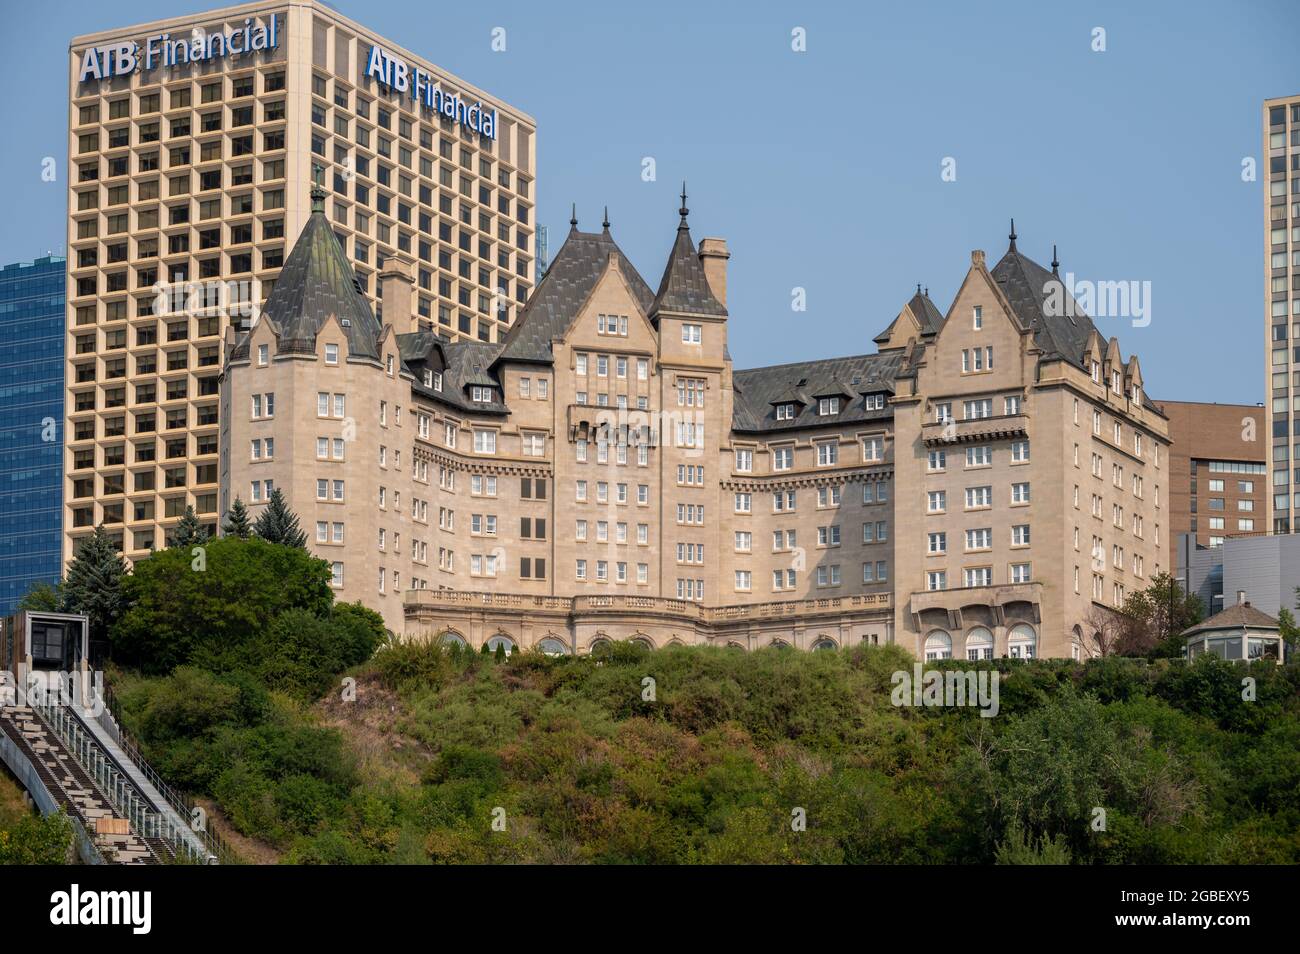 Edmonton, Alberta - July 30, 2021: View of the Hotel Macdonald in edmonton. Stock Photo